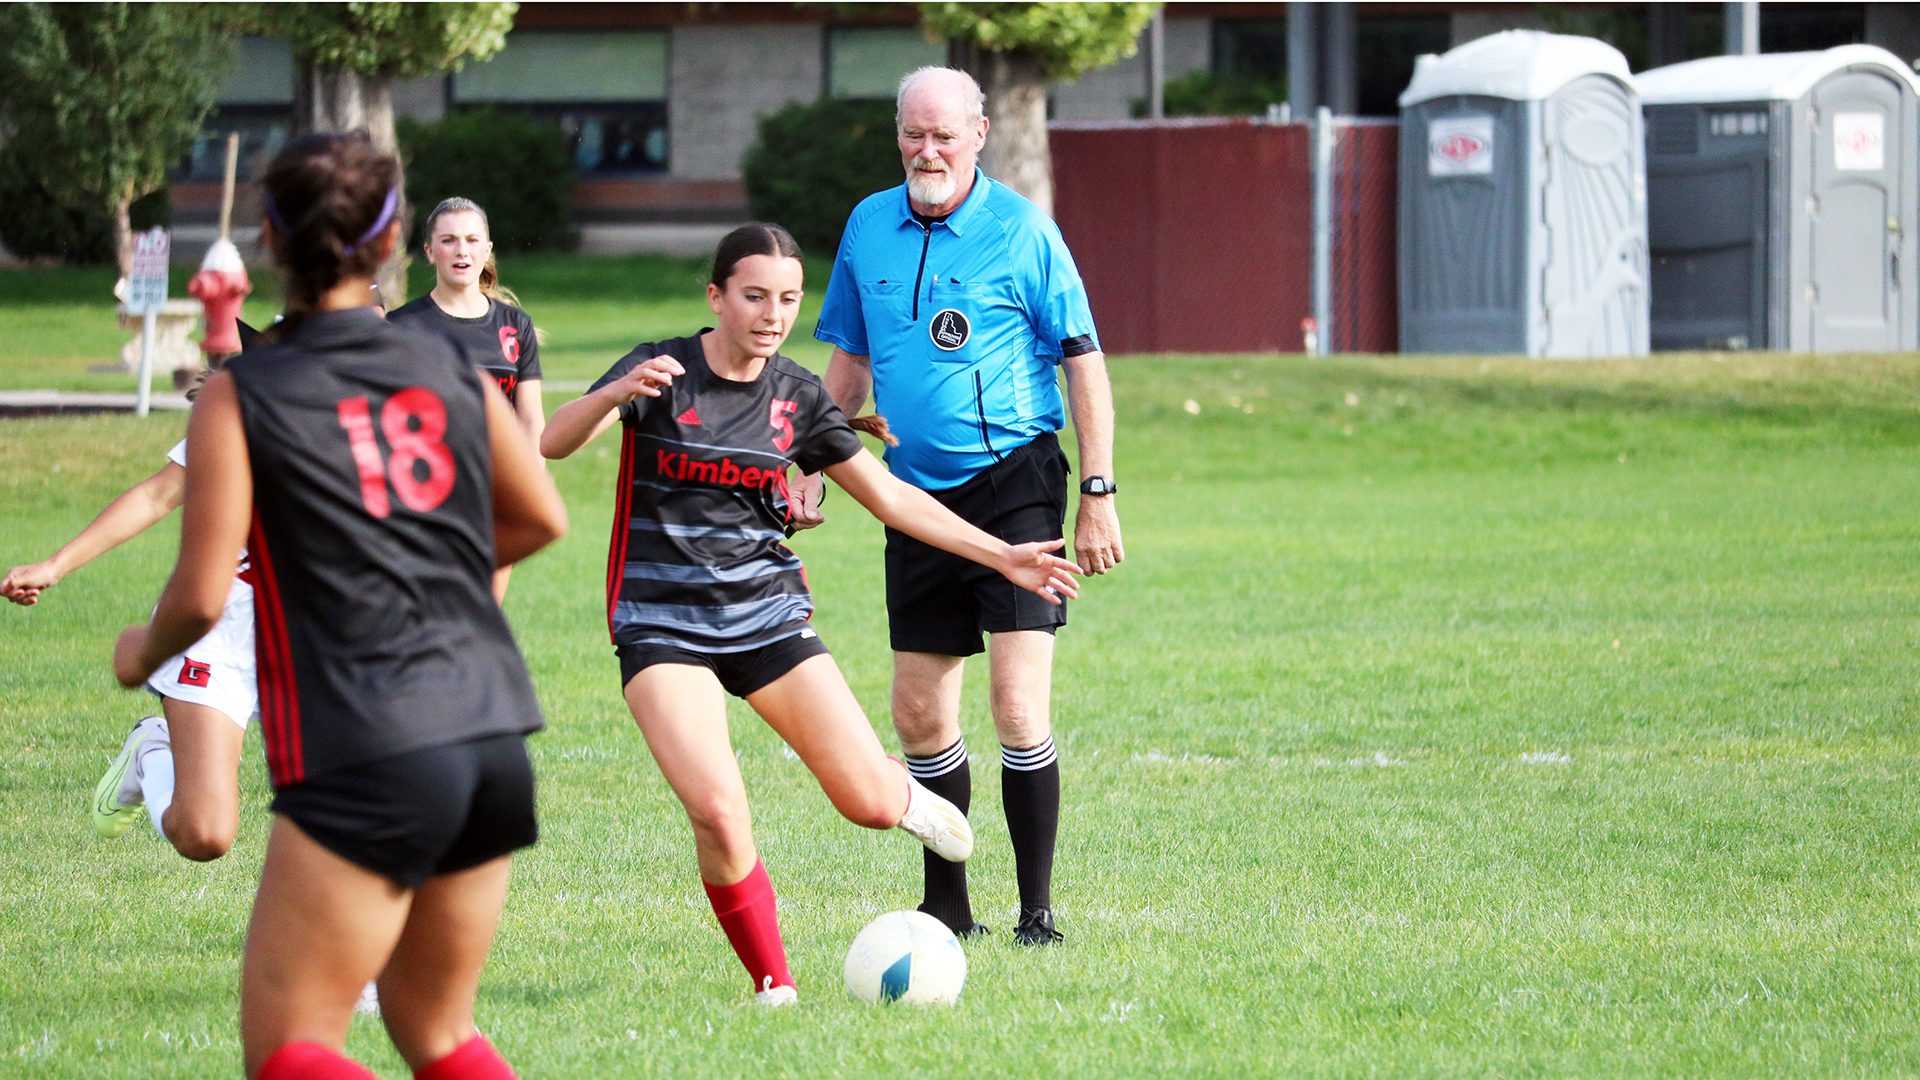 Senior Ava Wyatt kicks the ball during a game this season. | Photo by Publications staff